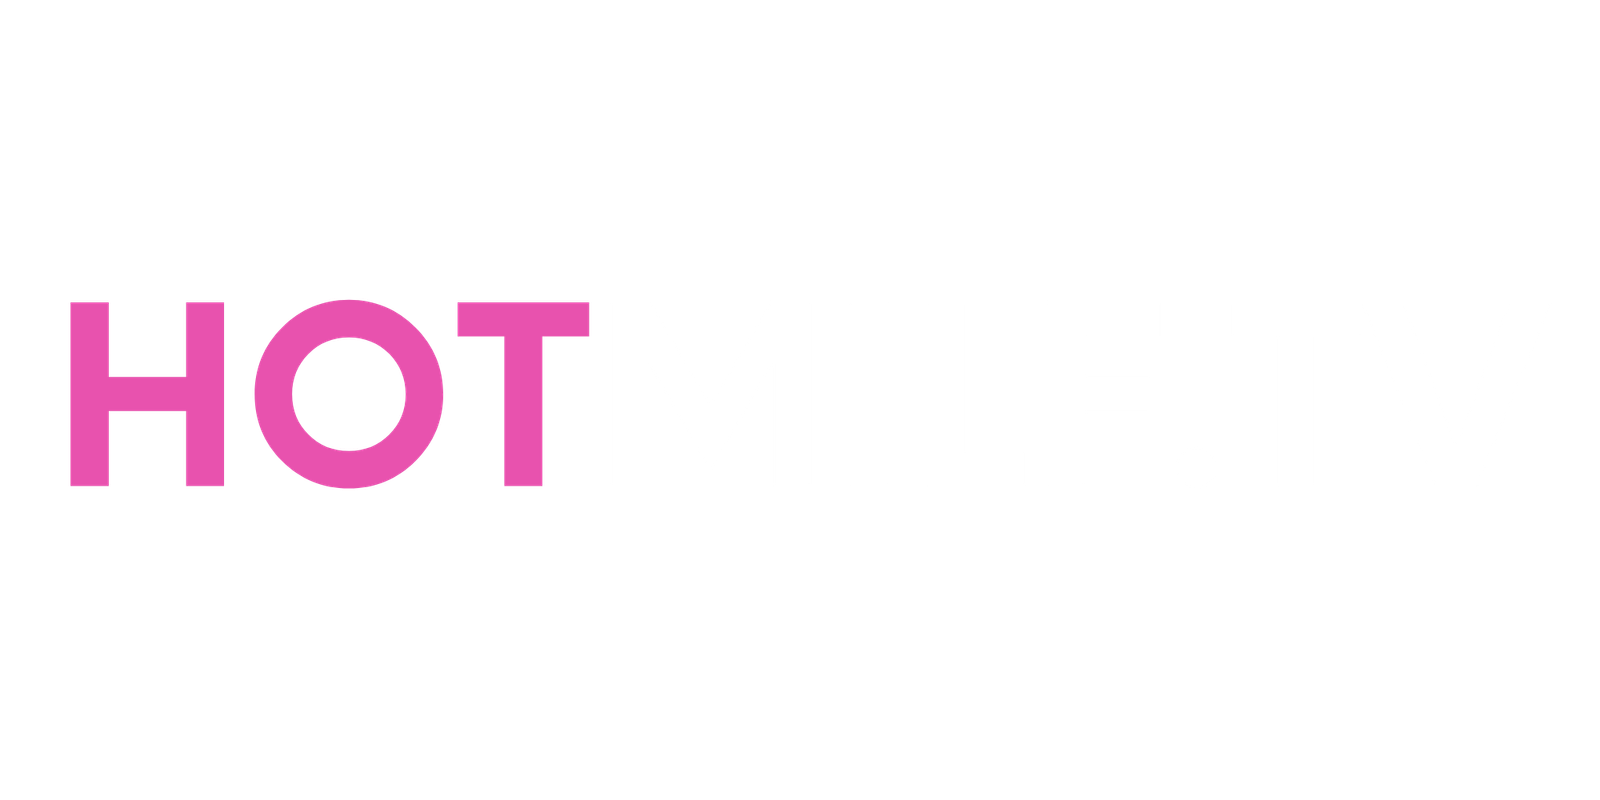 HotMILF.tv